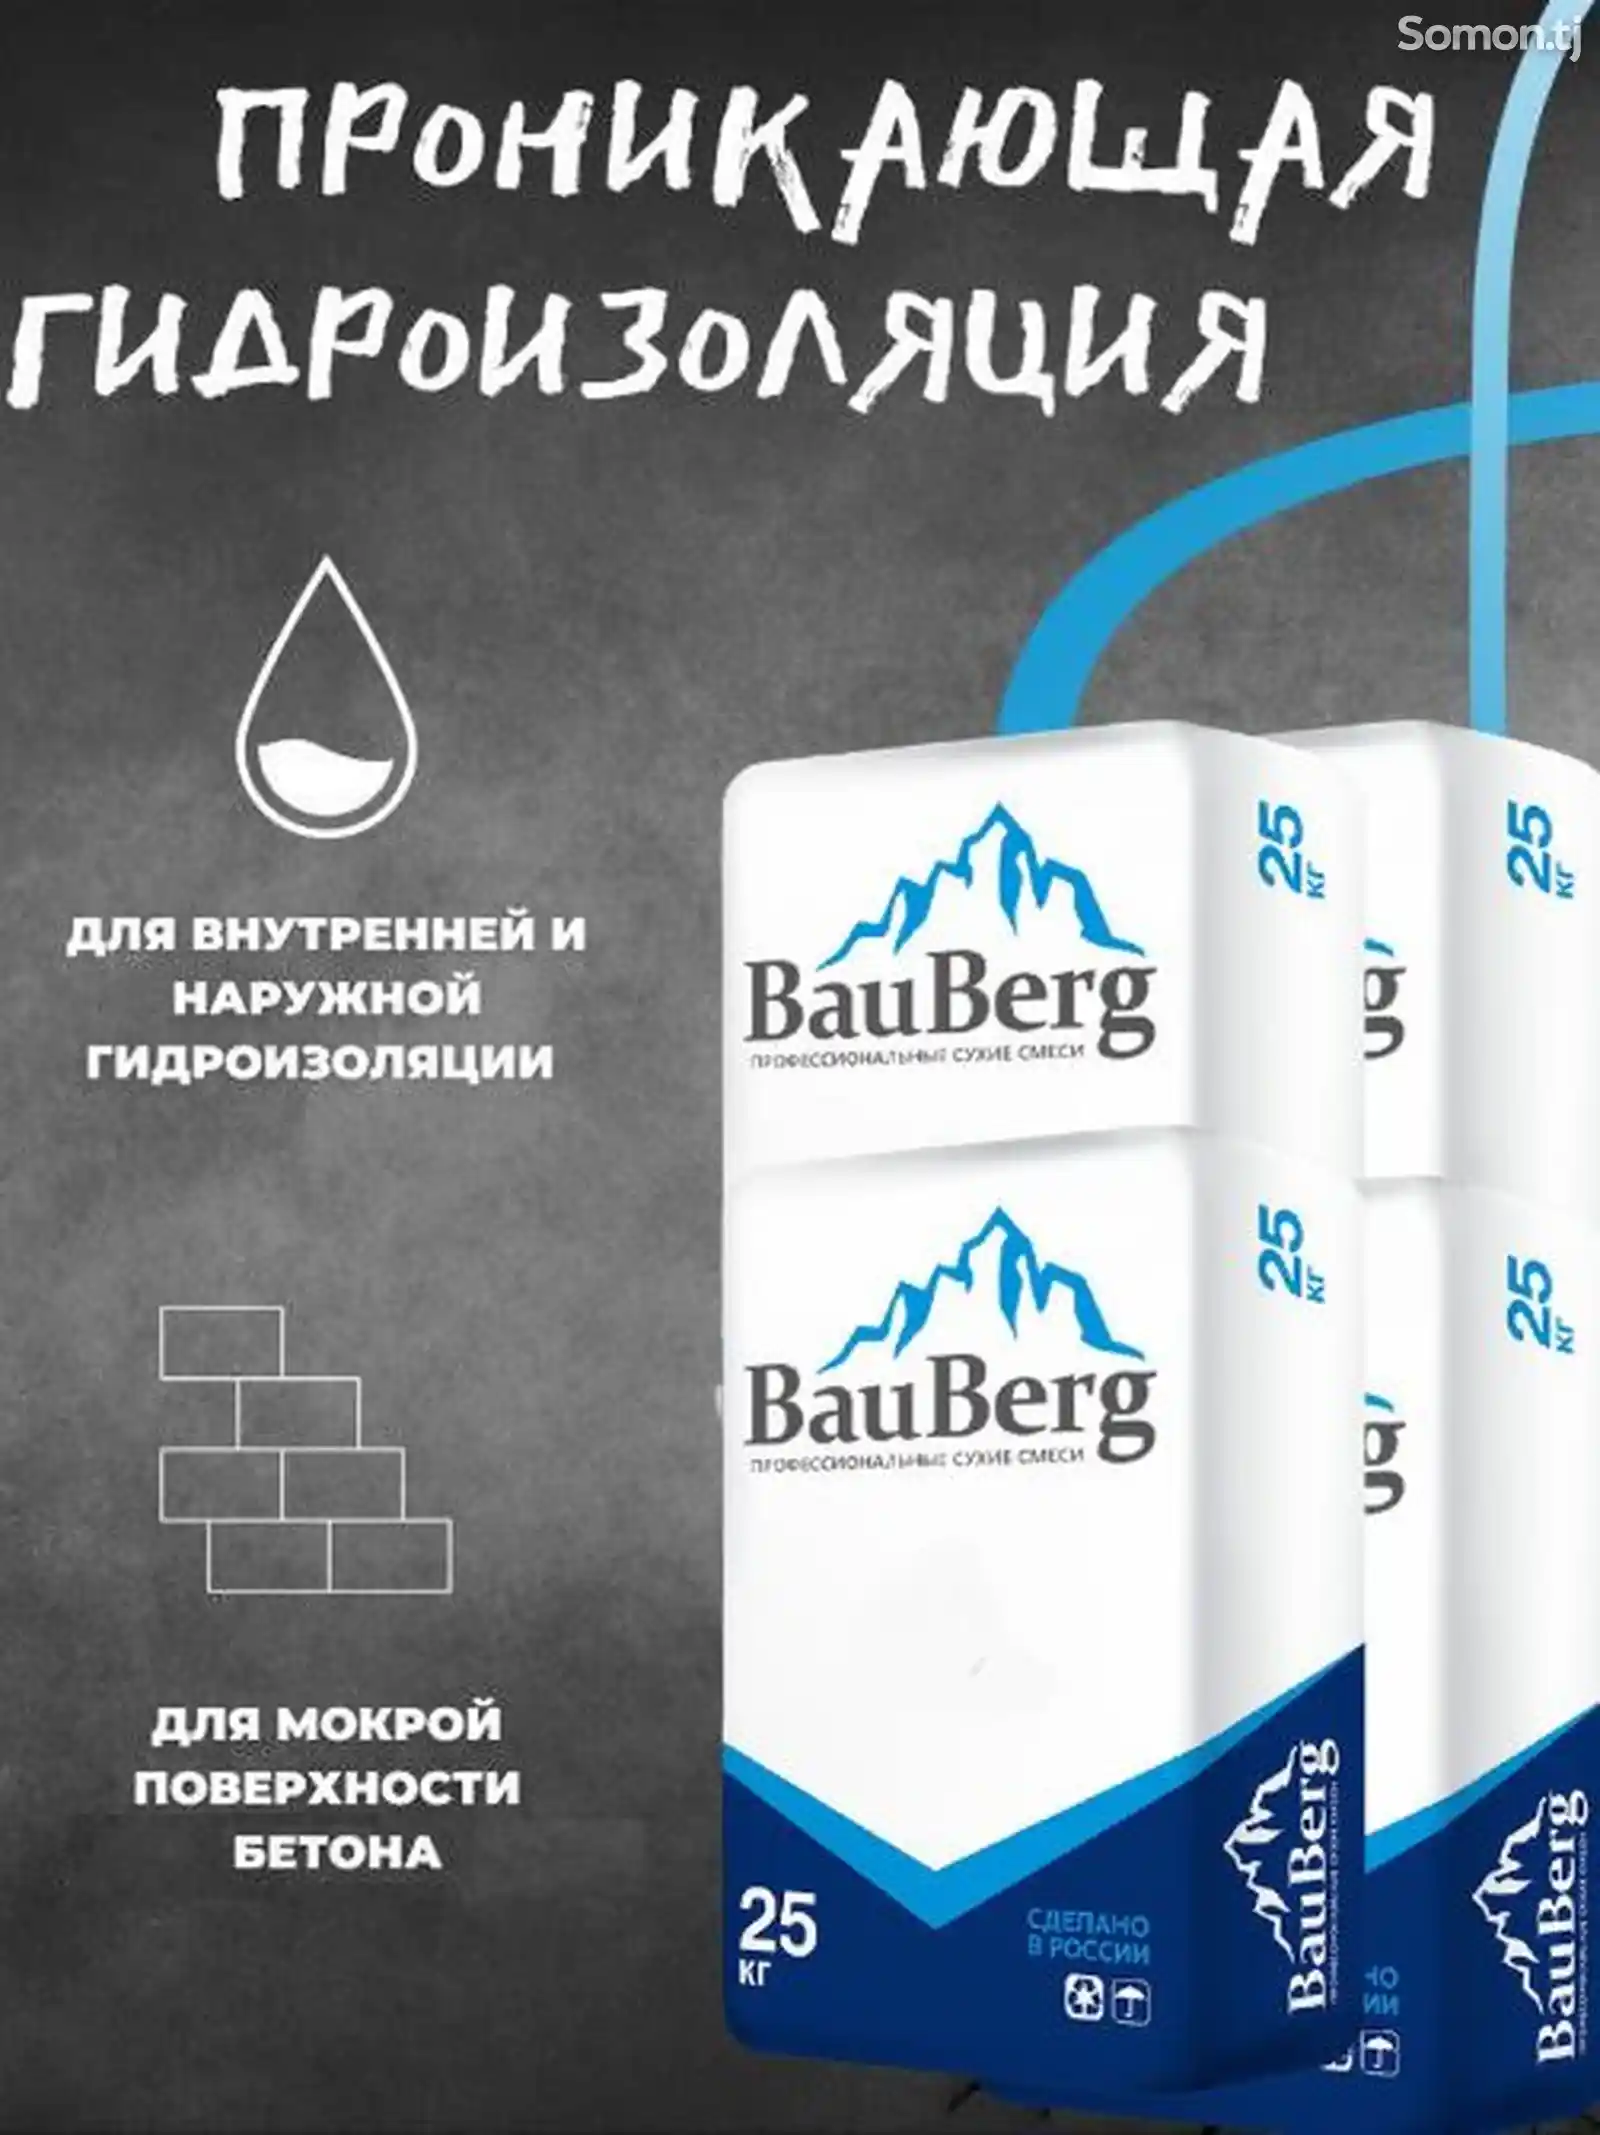 Проникающая гидроизоляция Bauberg-3